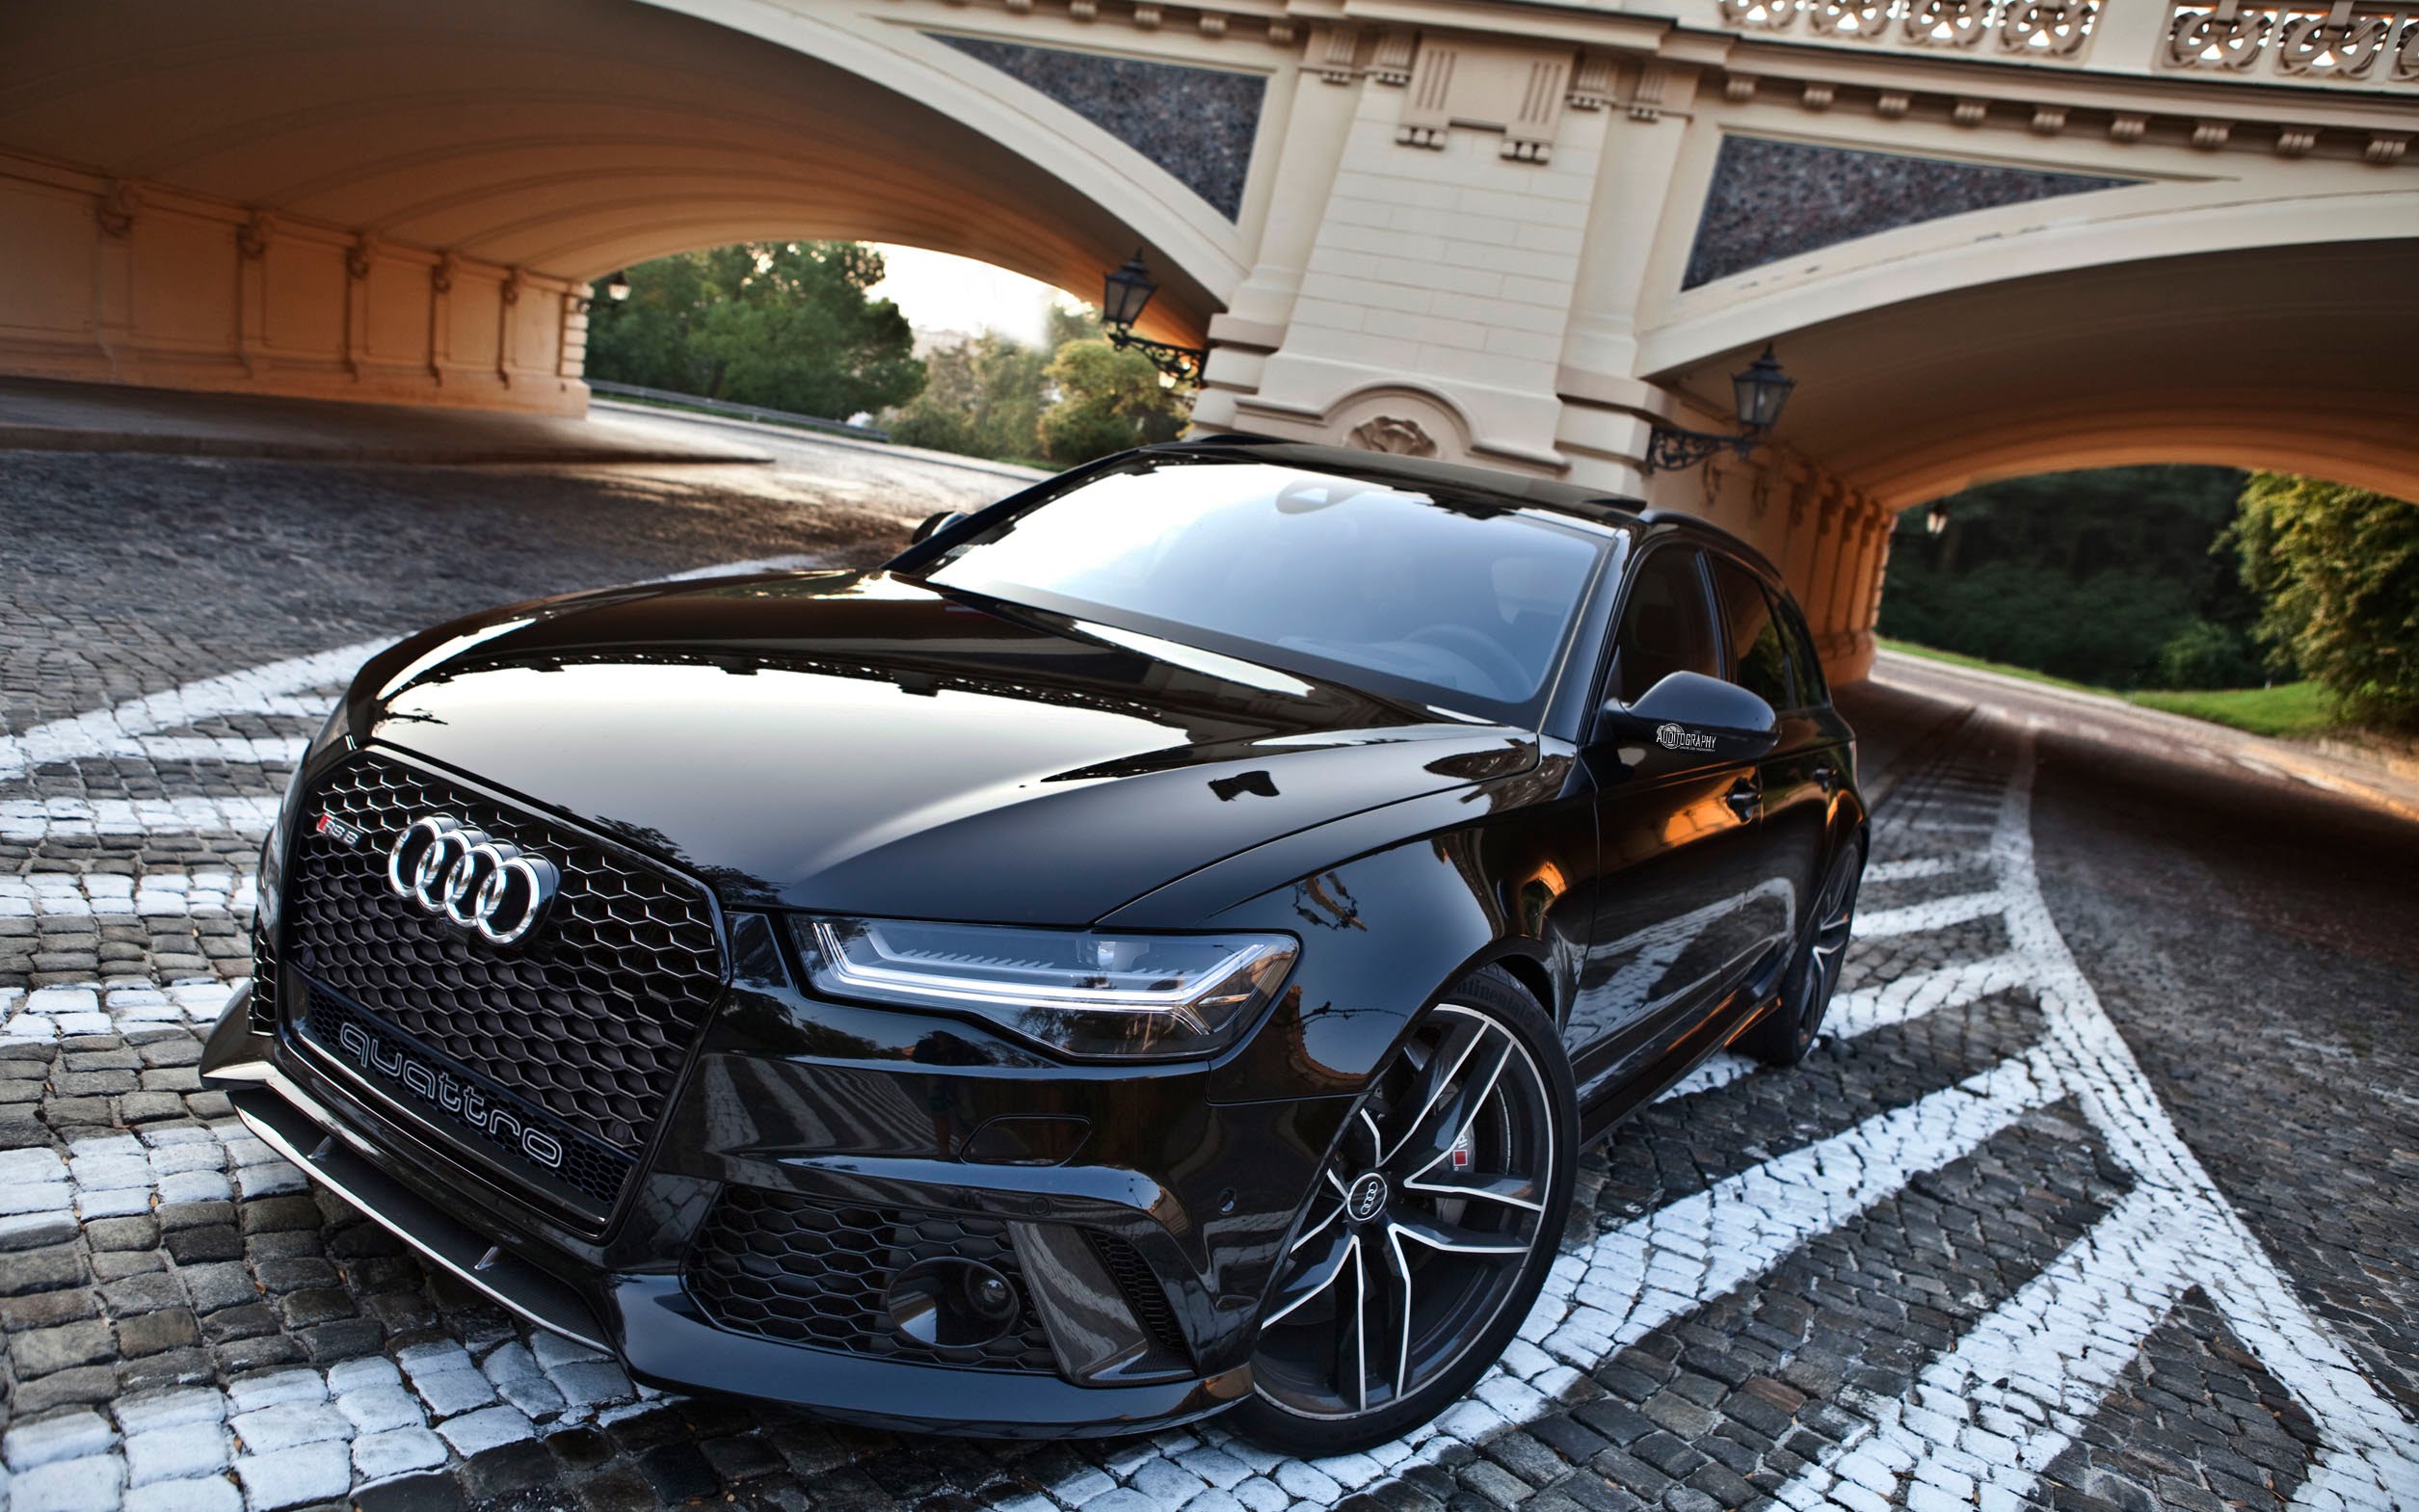 Audi RS6 Backgrounds, Compatible - PC, Mobile, Gadgets| 2510x1569 px